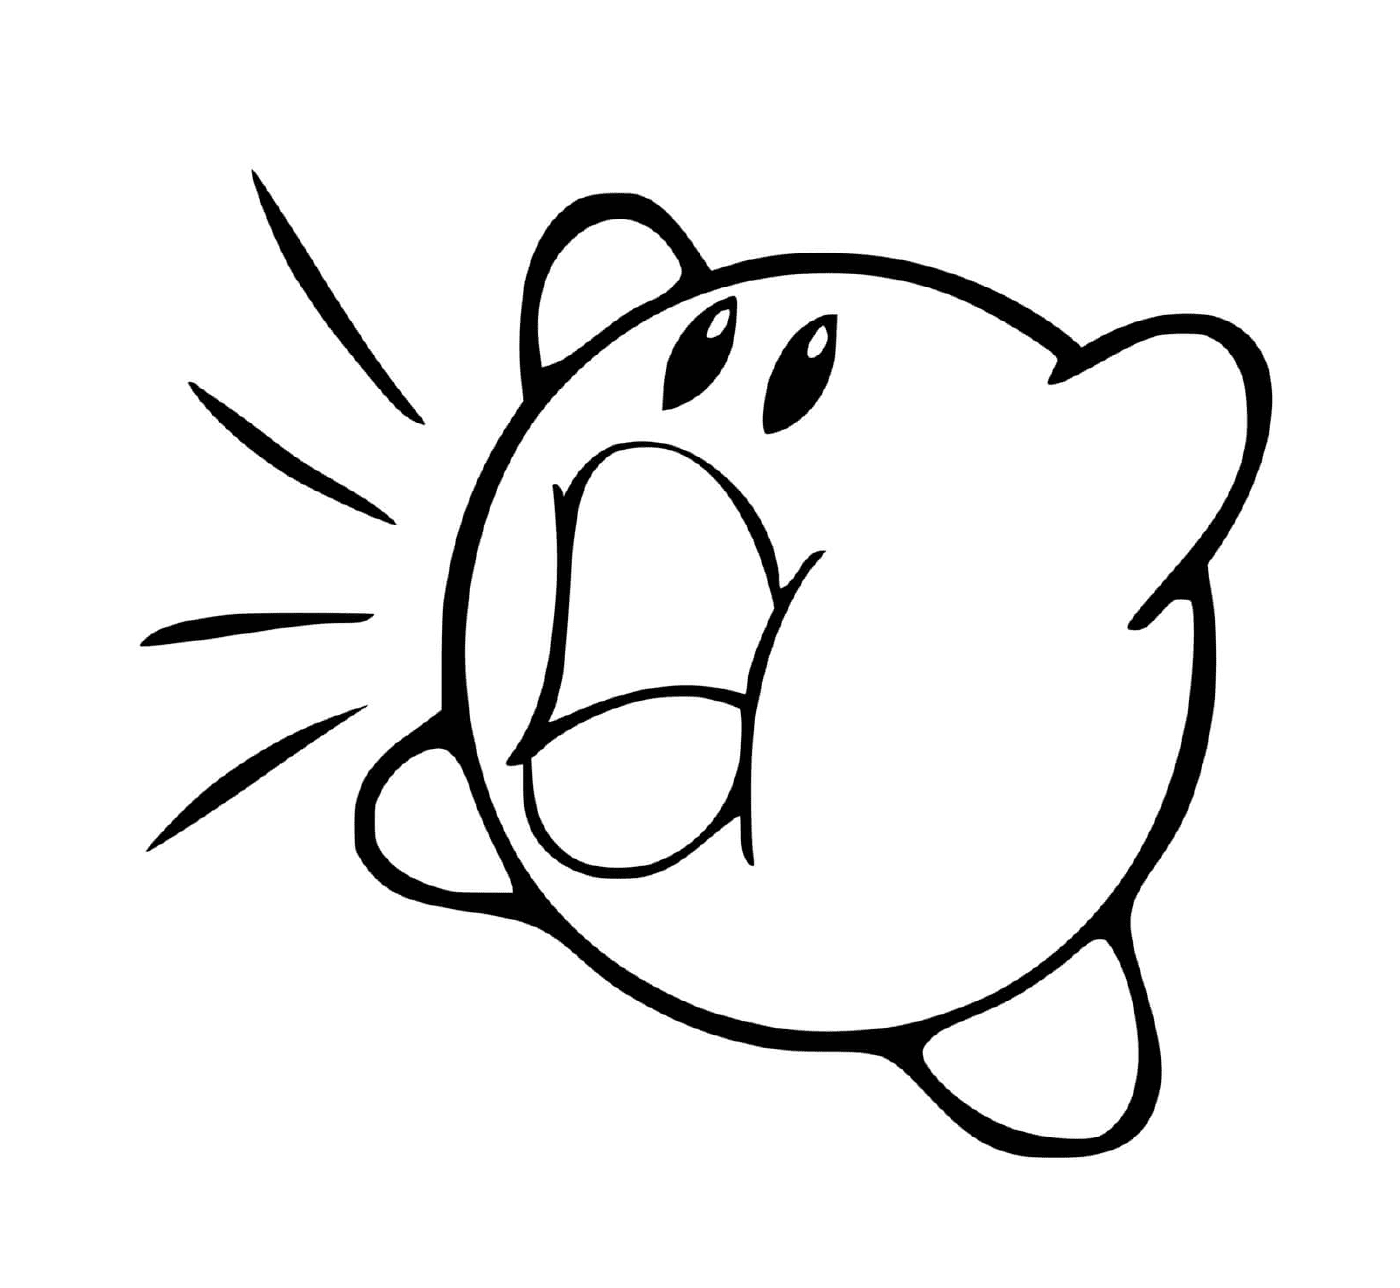  Kirby se traga todo a su manera 